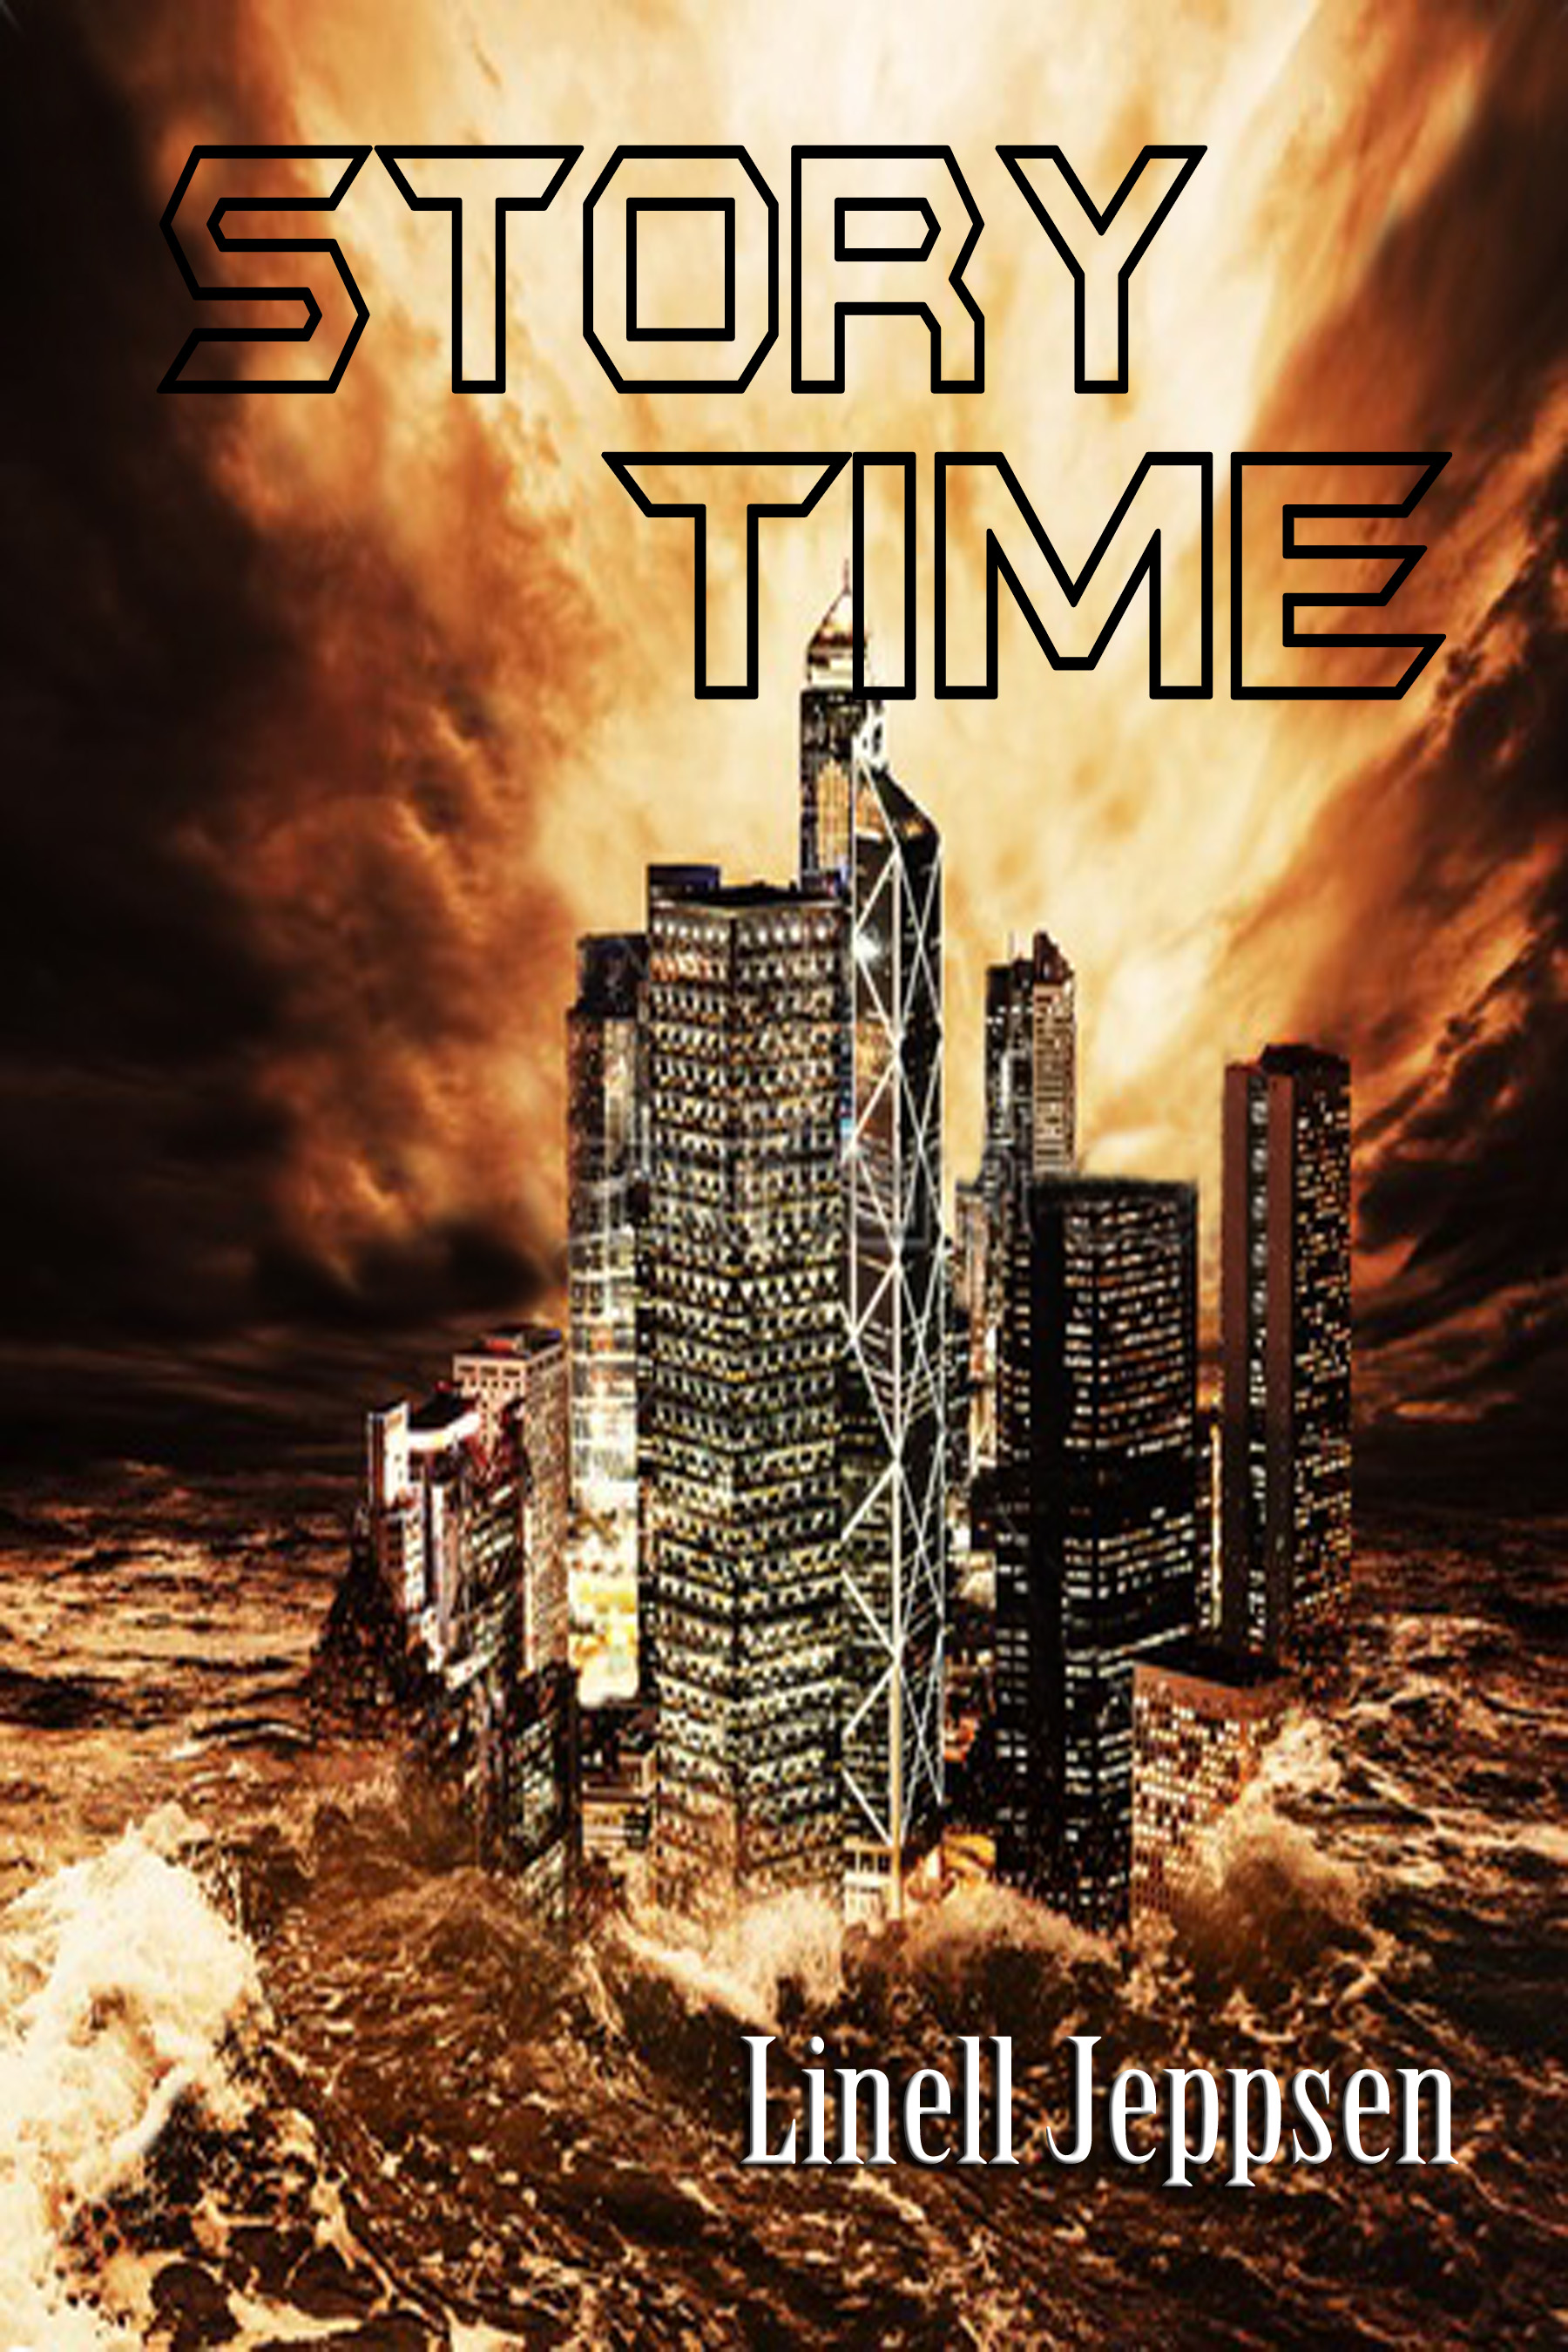 Cover art for the novel, Story Time